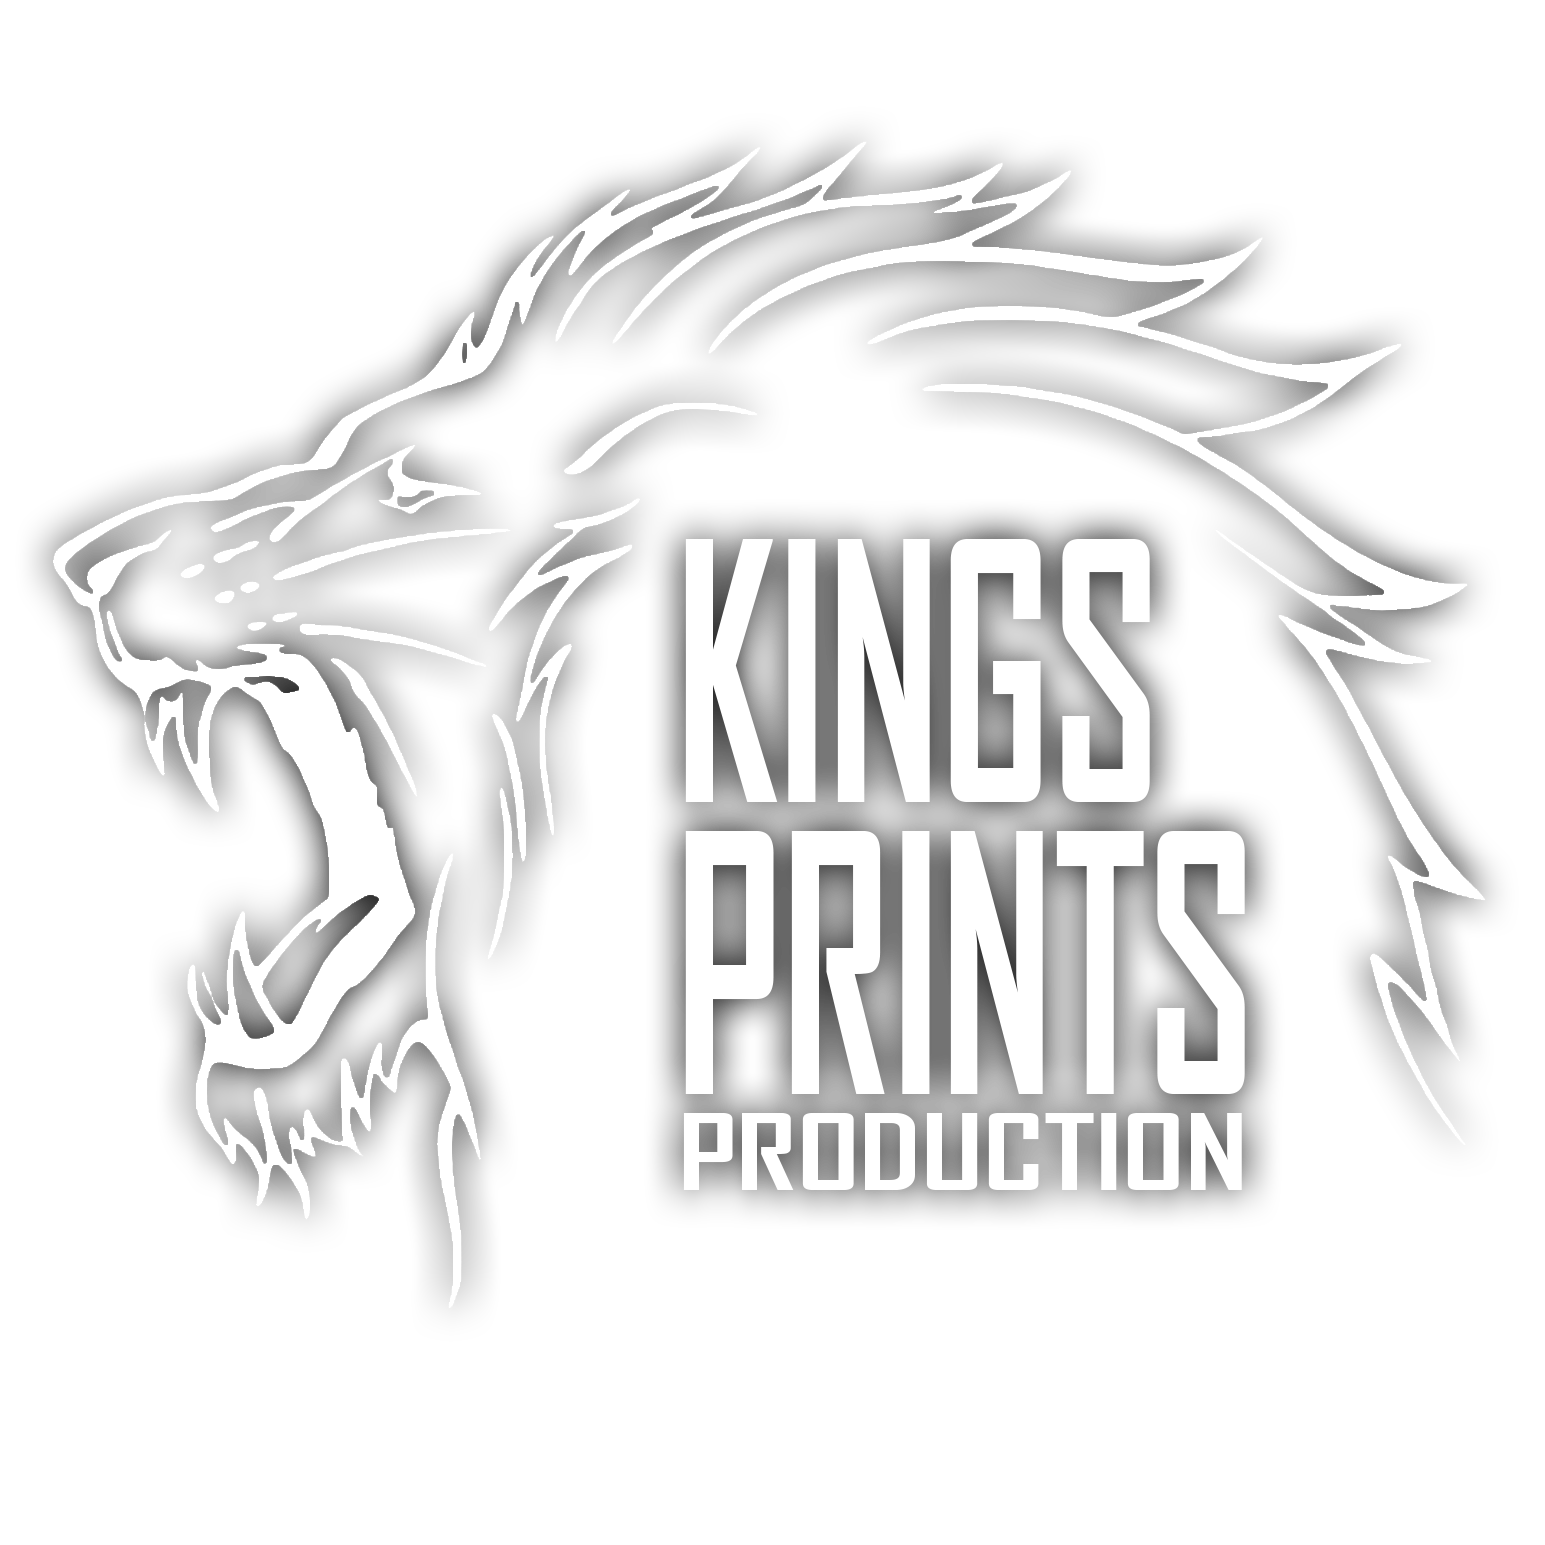 Kings Prints Production